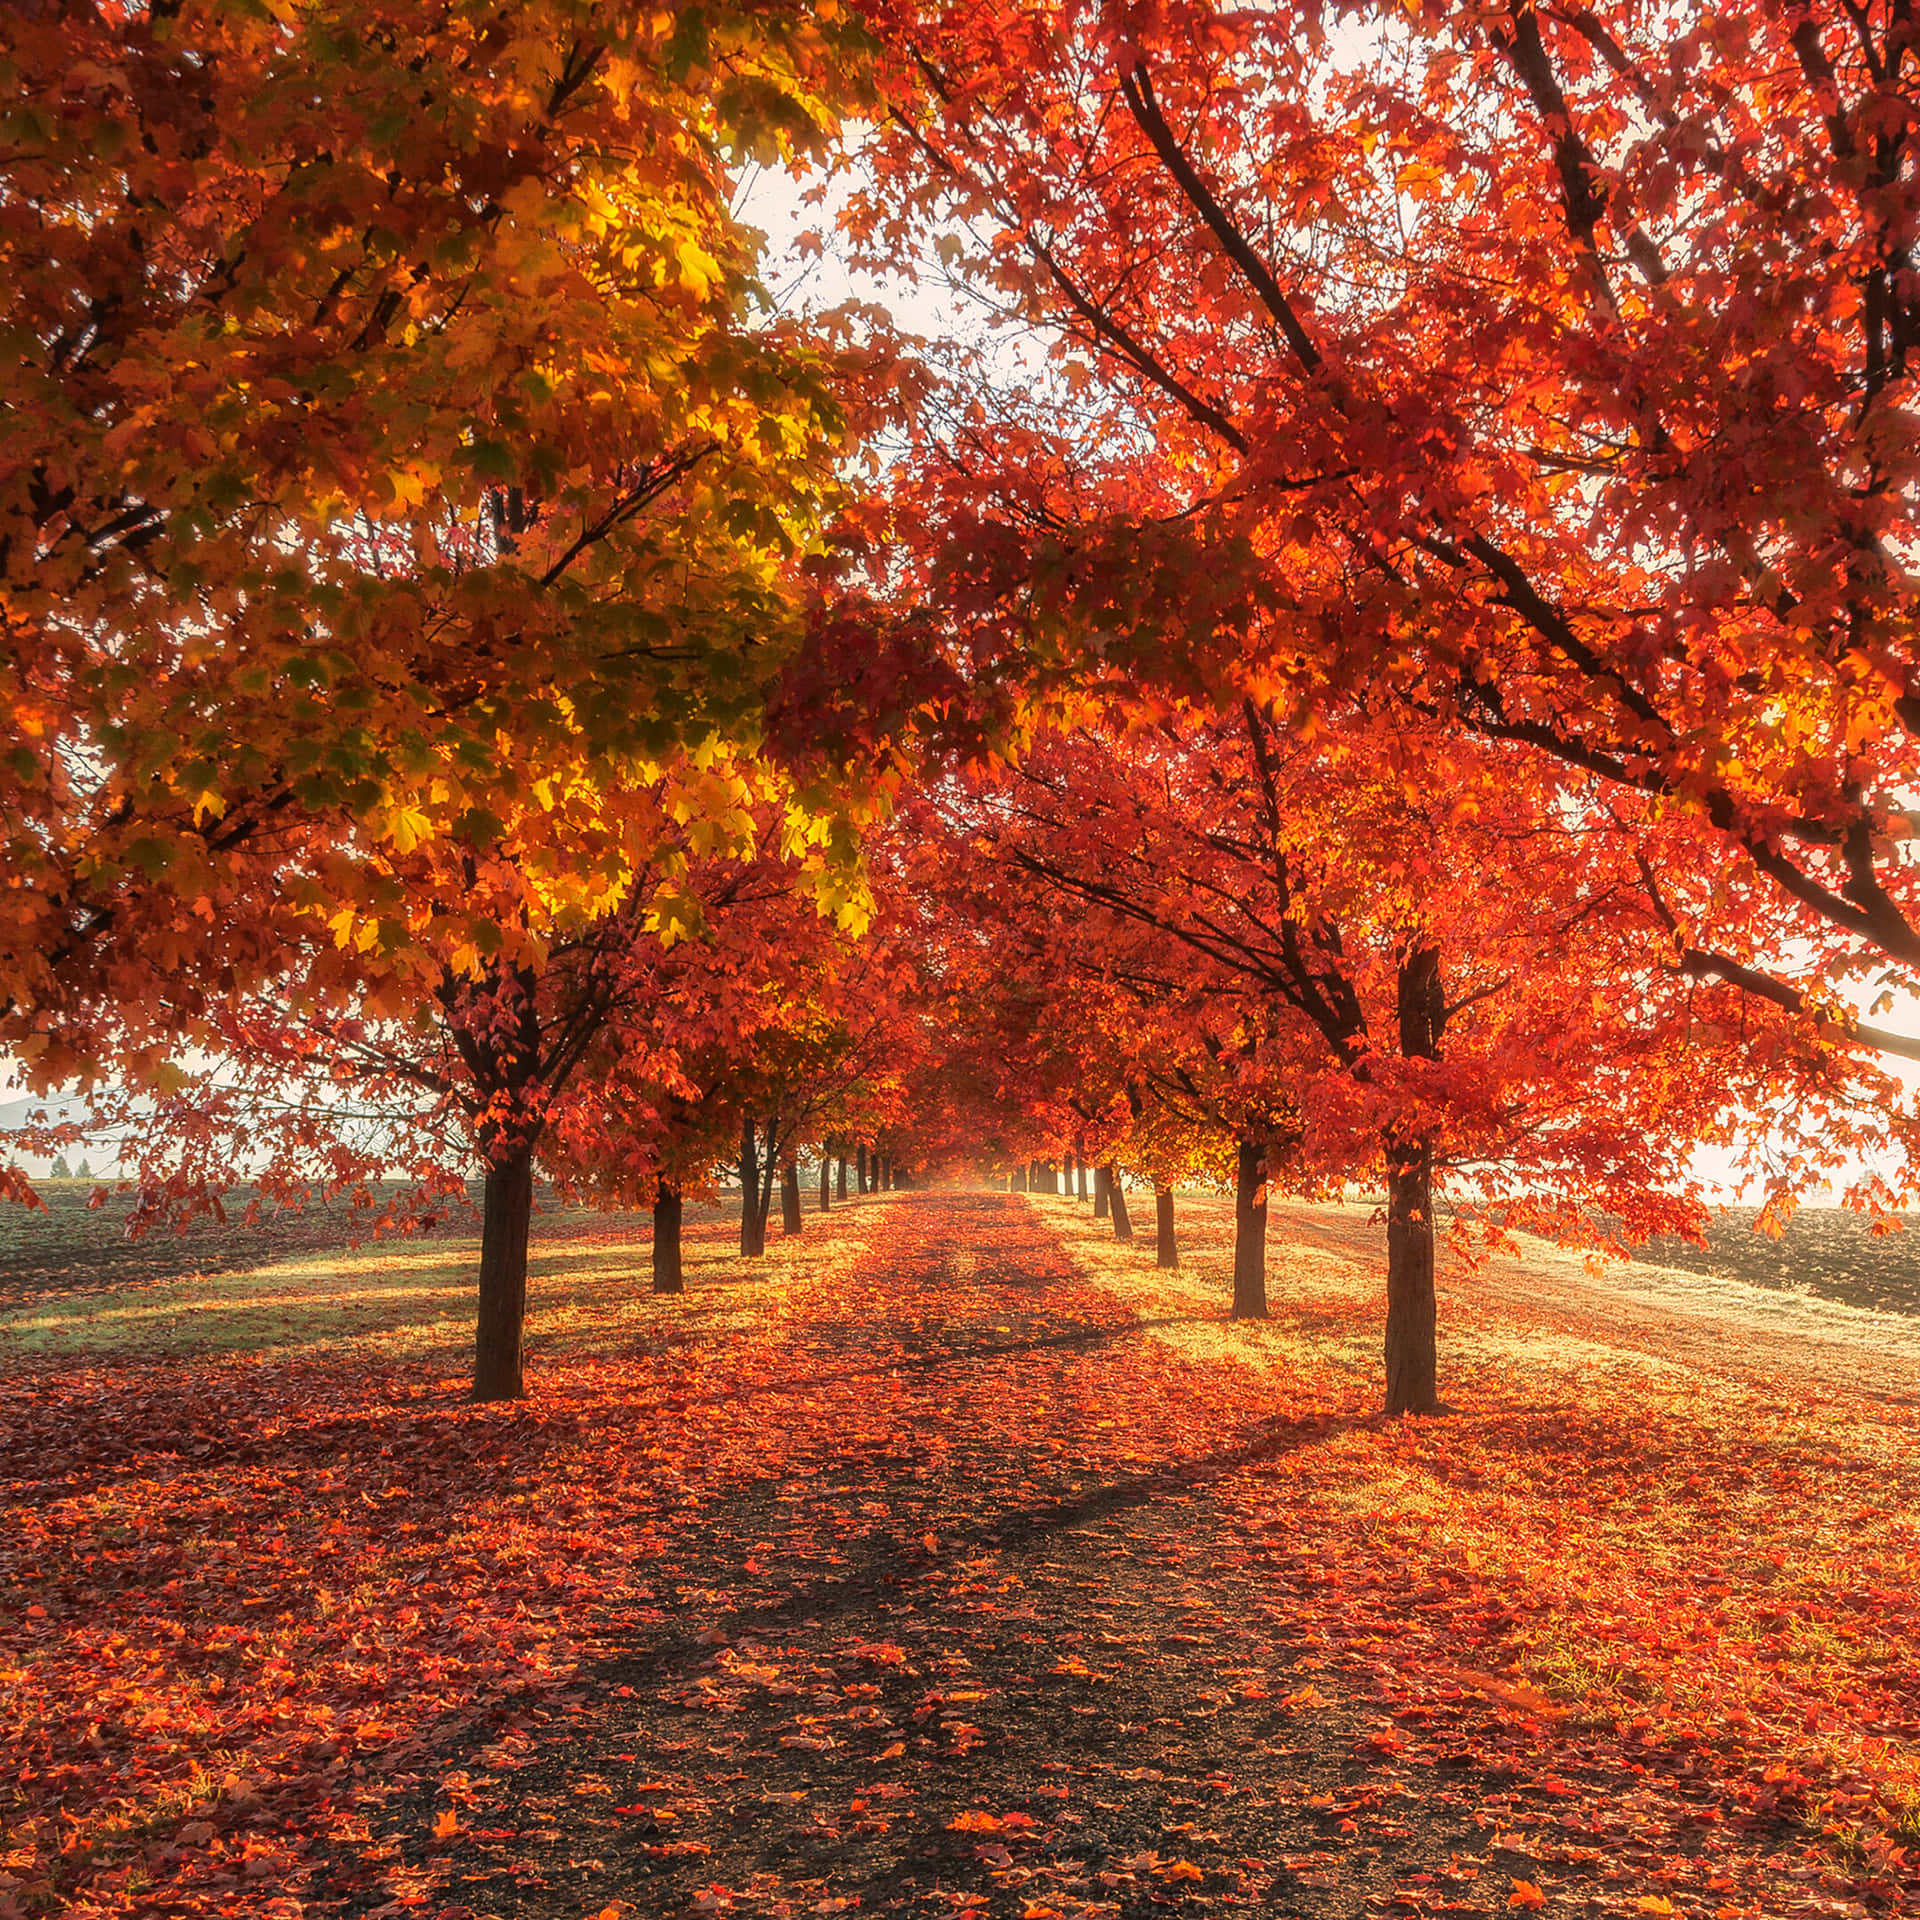 Image Airy Autumn Aesthetic Adorns This Macbook Wallpaper